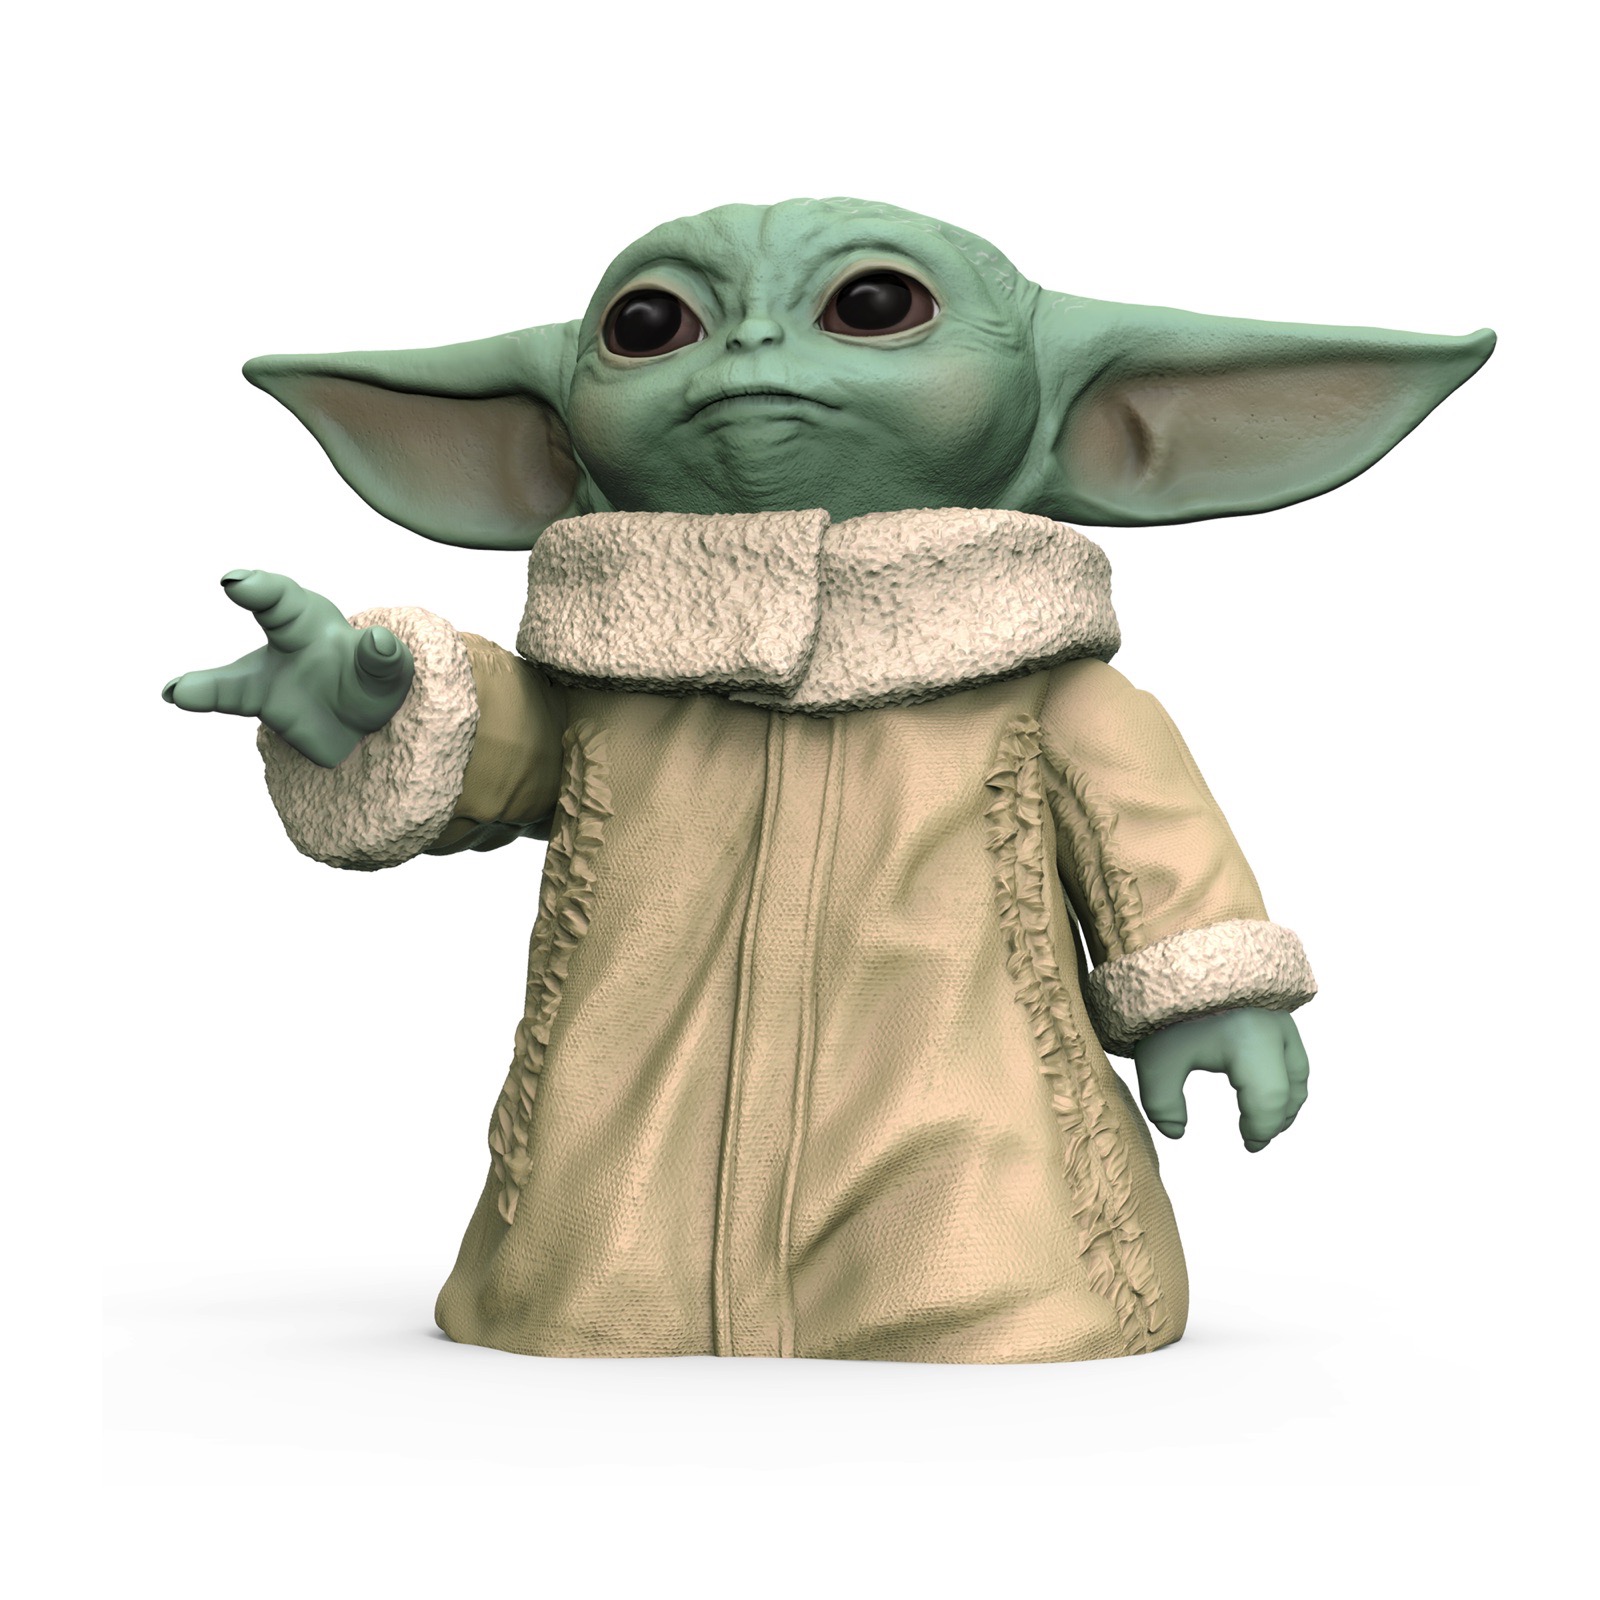 Baby Yoda 6.5-inch figurine